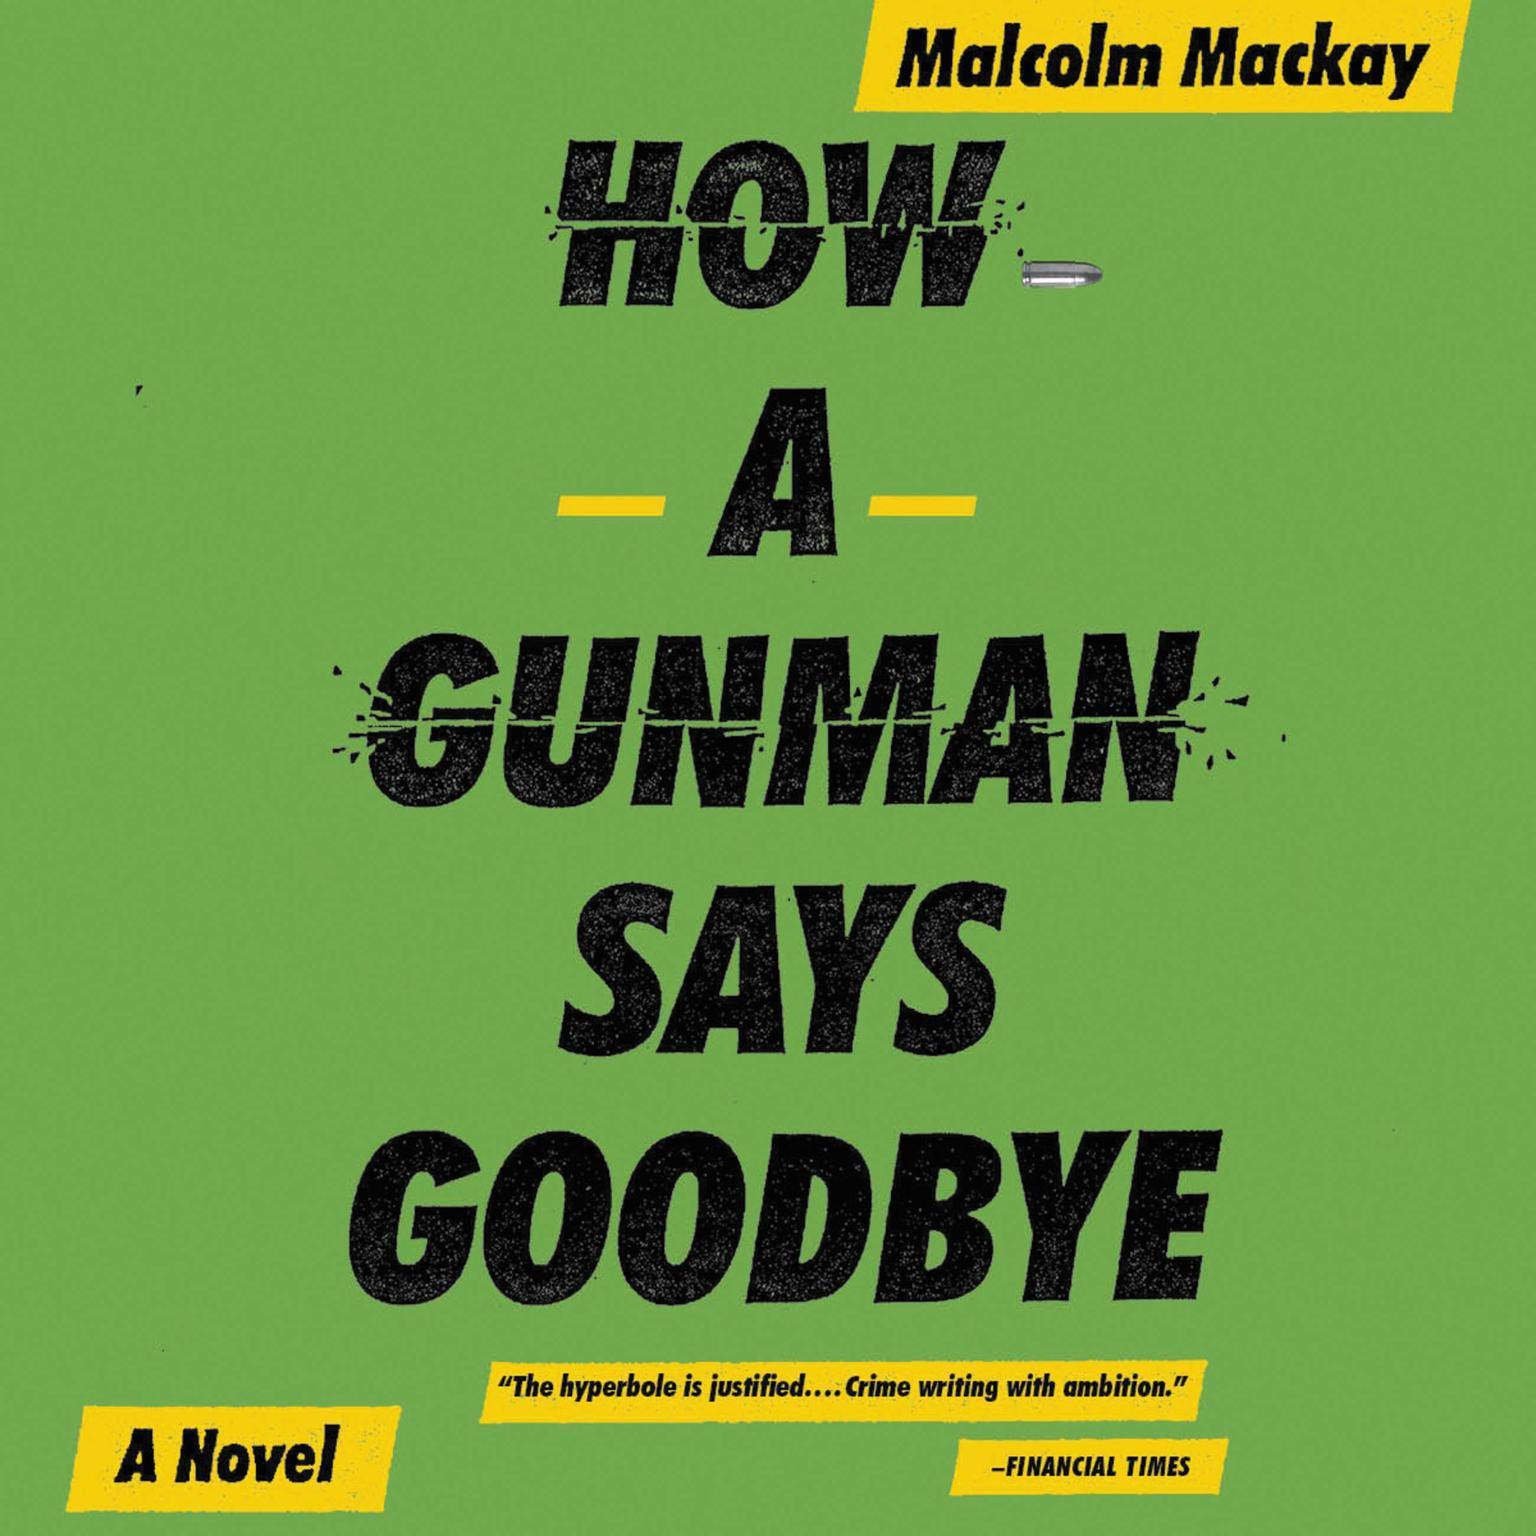 How a Gunman Says Goodbye Audiobook, by Malcolm Mackay